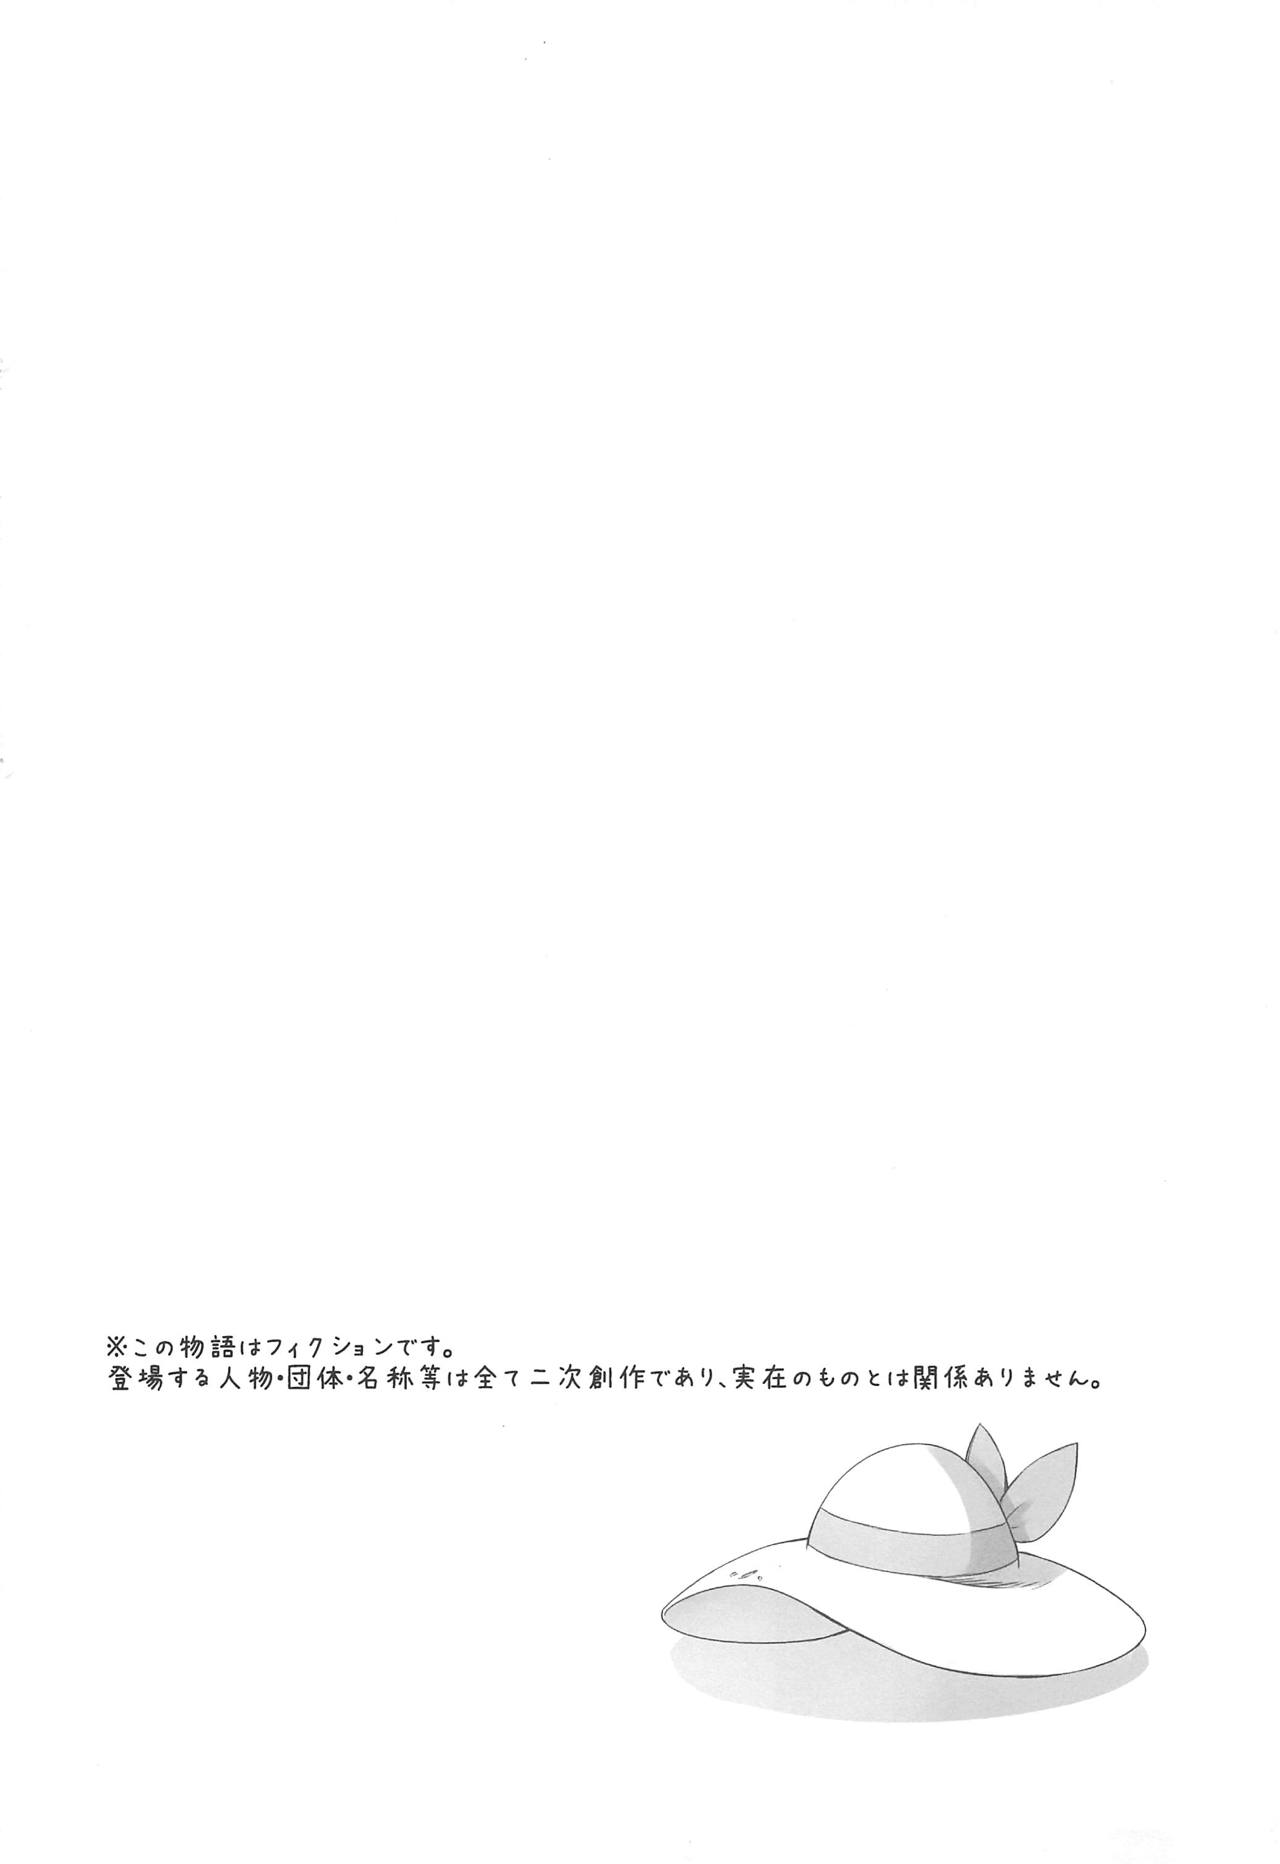 (COMIC1☆15) [白ネギ屋 (miya9)] 博士の夜の助手。2 (ポケットモンスター サン・ムーン)